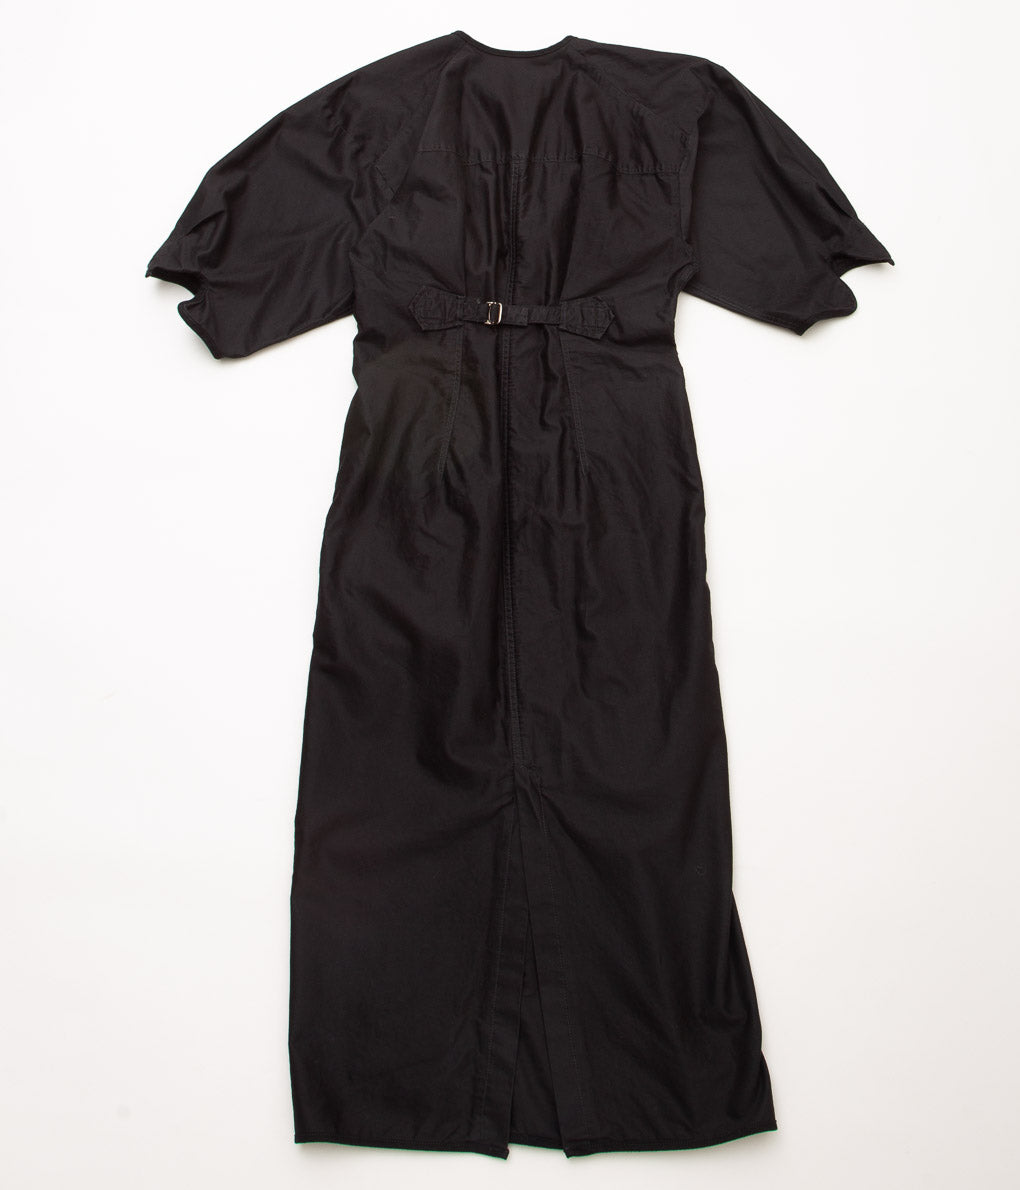 PHOTOCOPIEU "WASHED MILITARY DRESS"(BLACK)